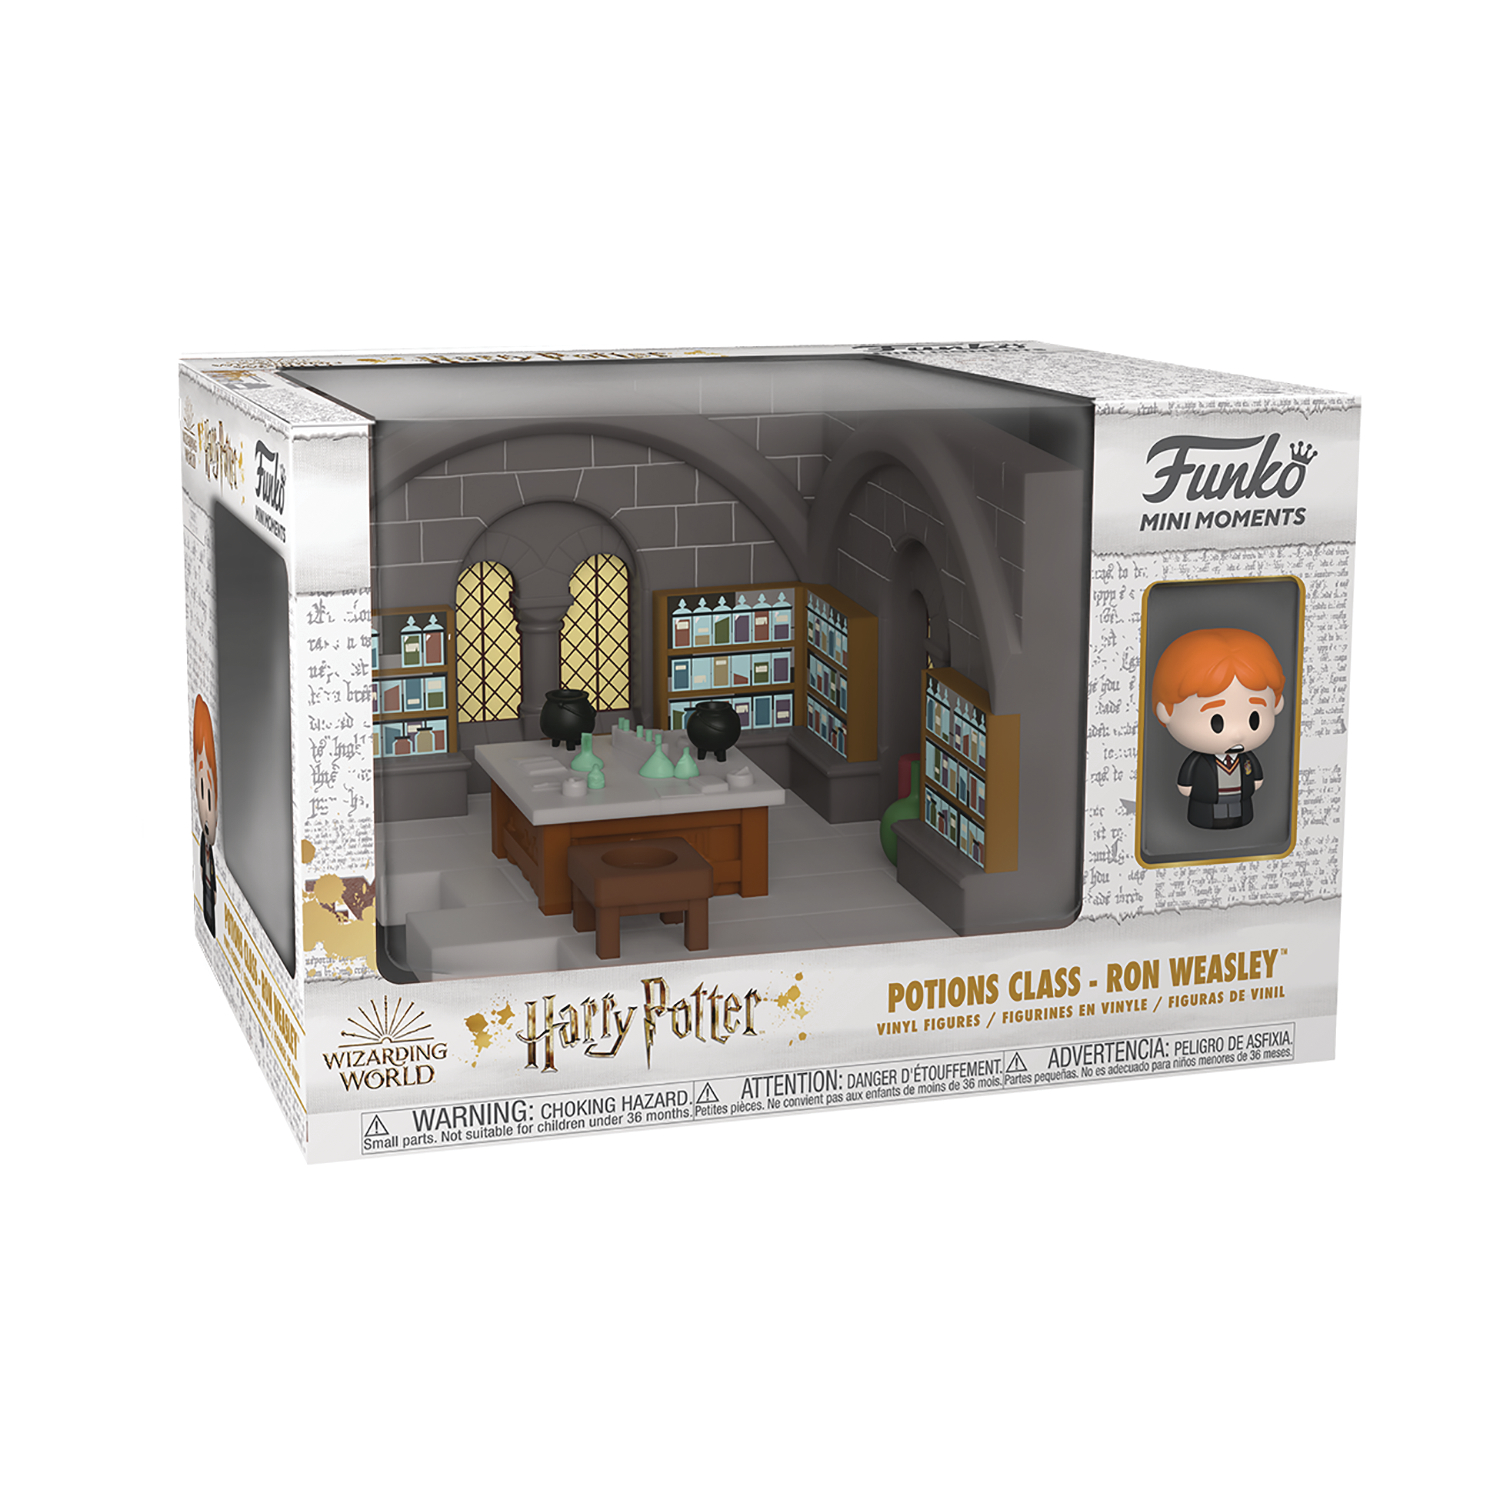 Funko Mini Moments: Harry Potter Anniversary Potions Class w/ Ron Weasley Mini Pop! Figure